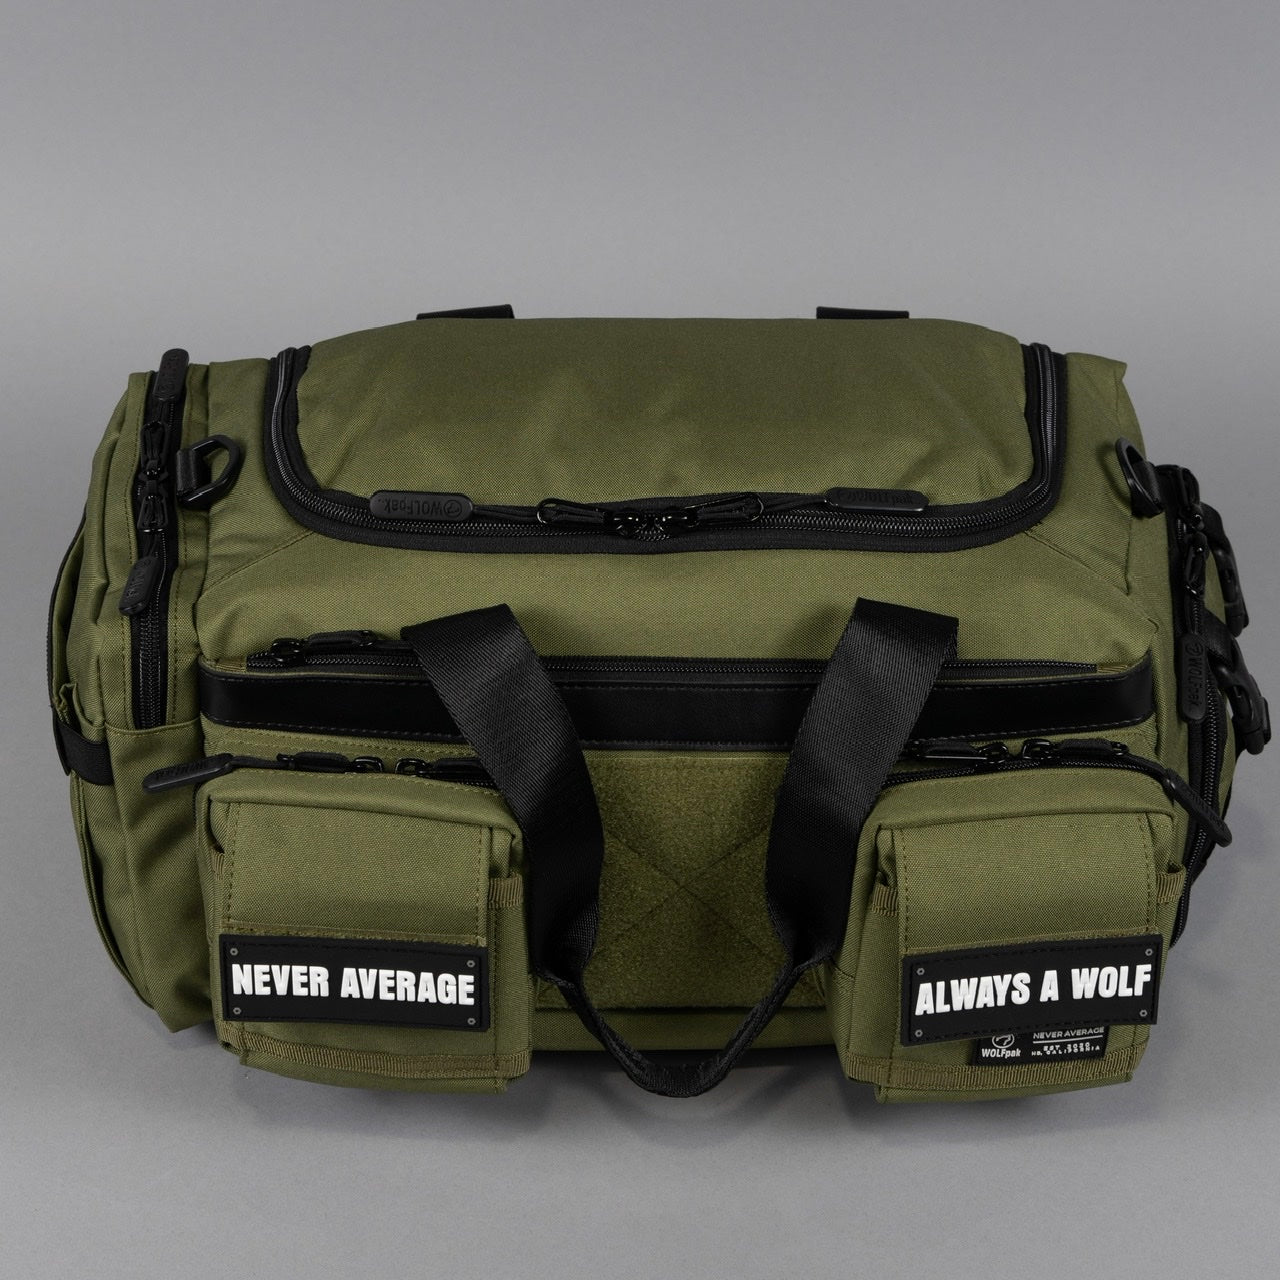 20L Mini Duffle Bag Athletic Green